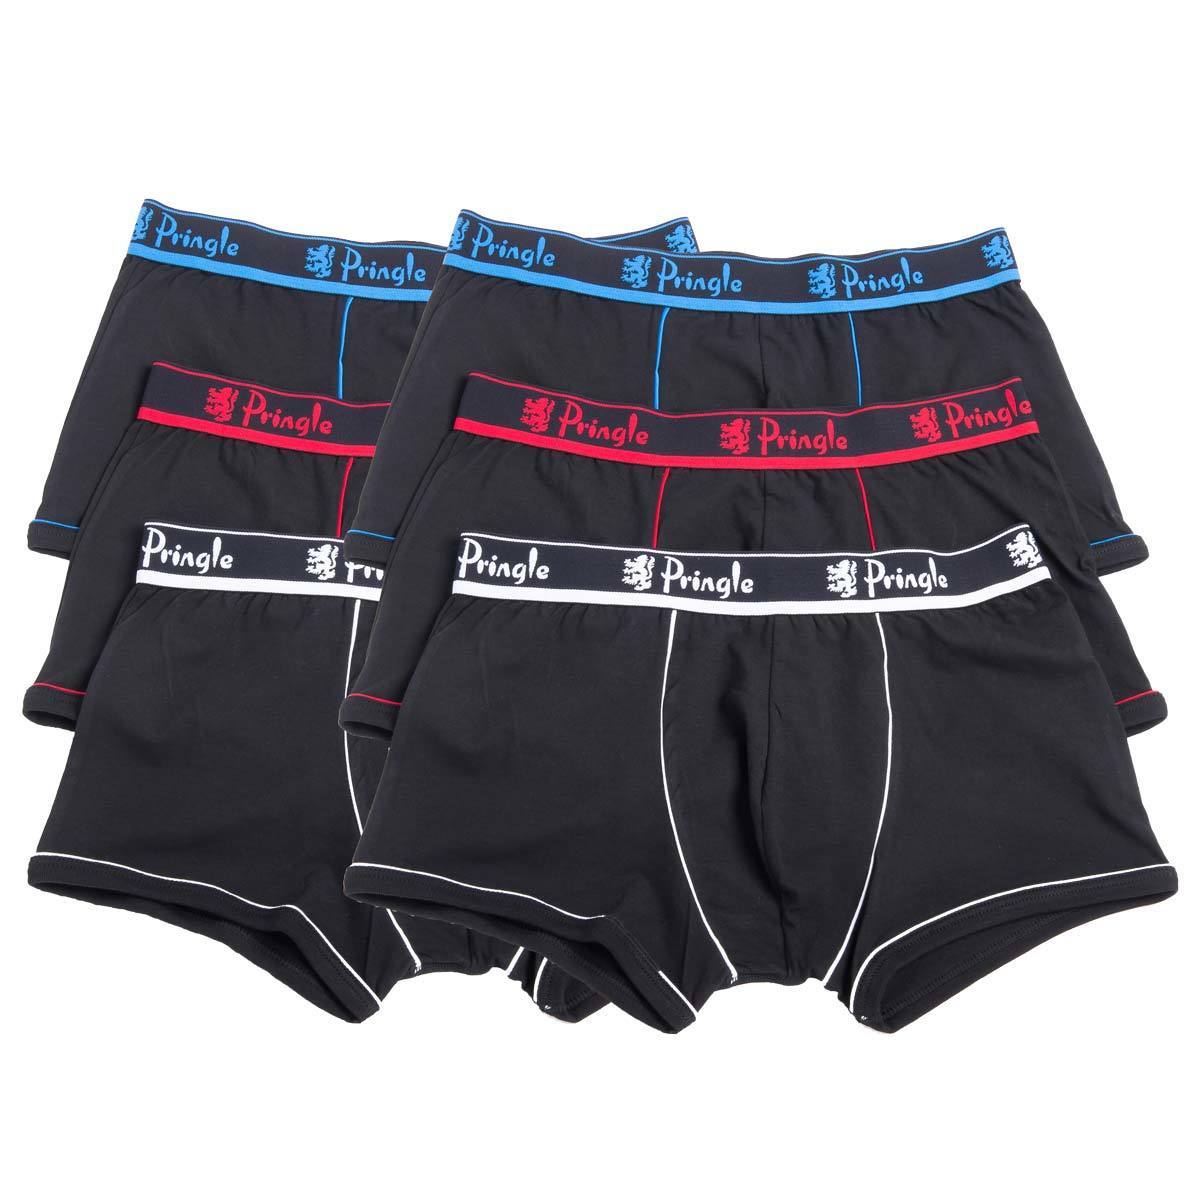 Pringle 2 x 3 - Pack Men's Edward Boxer Shorts in Black, Small